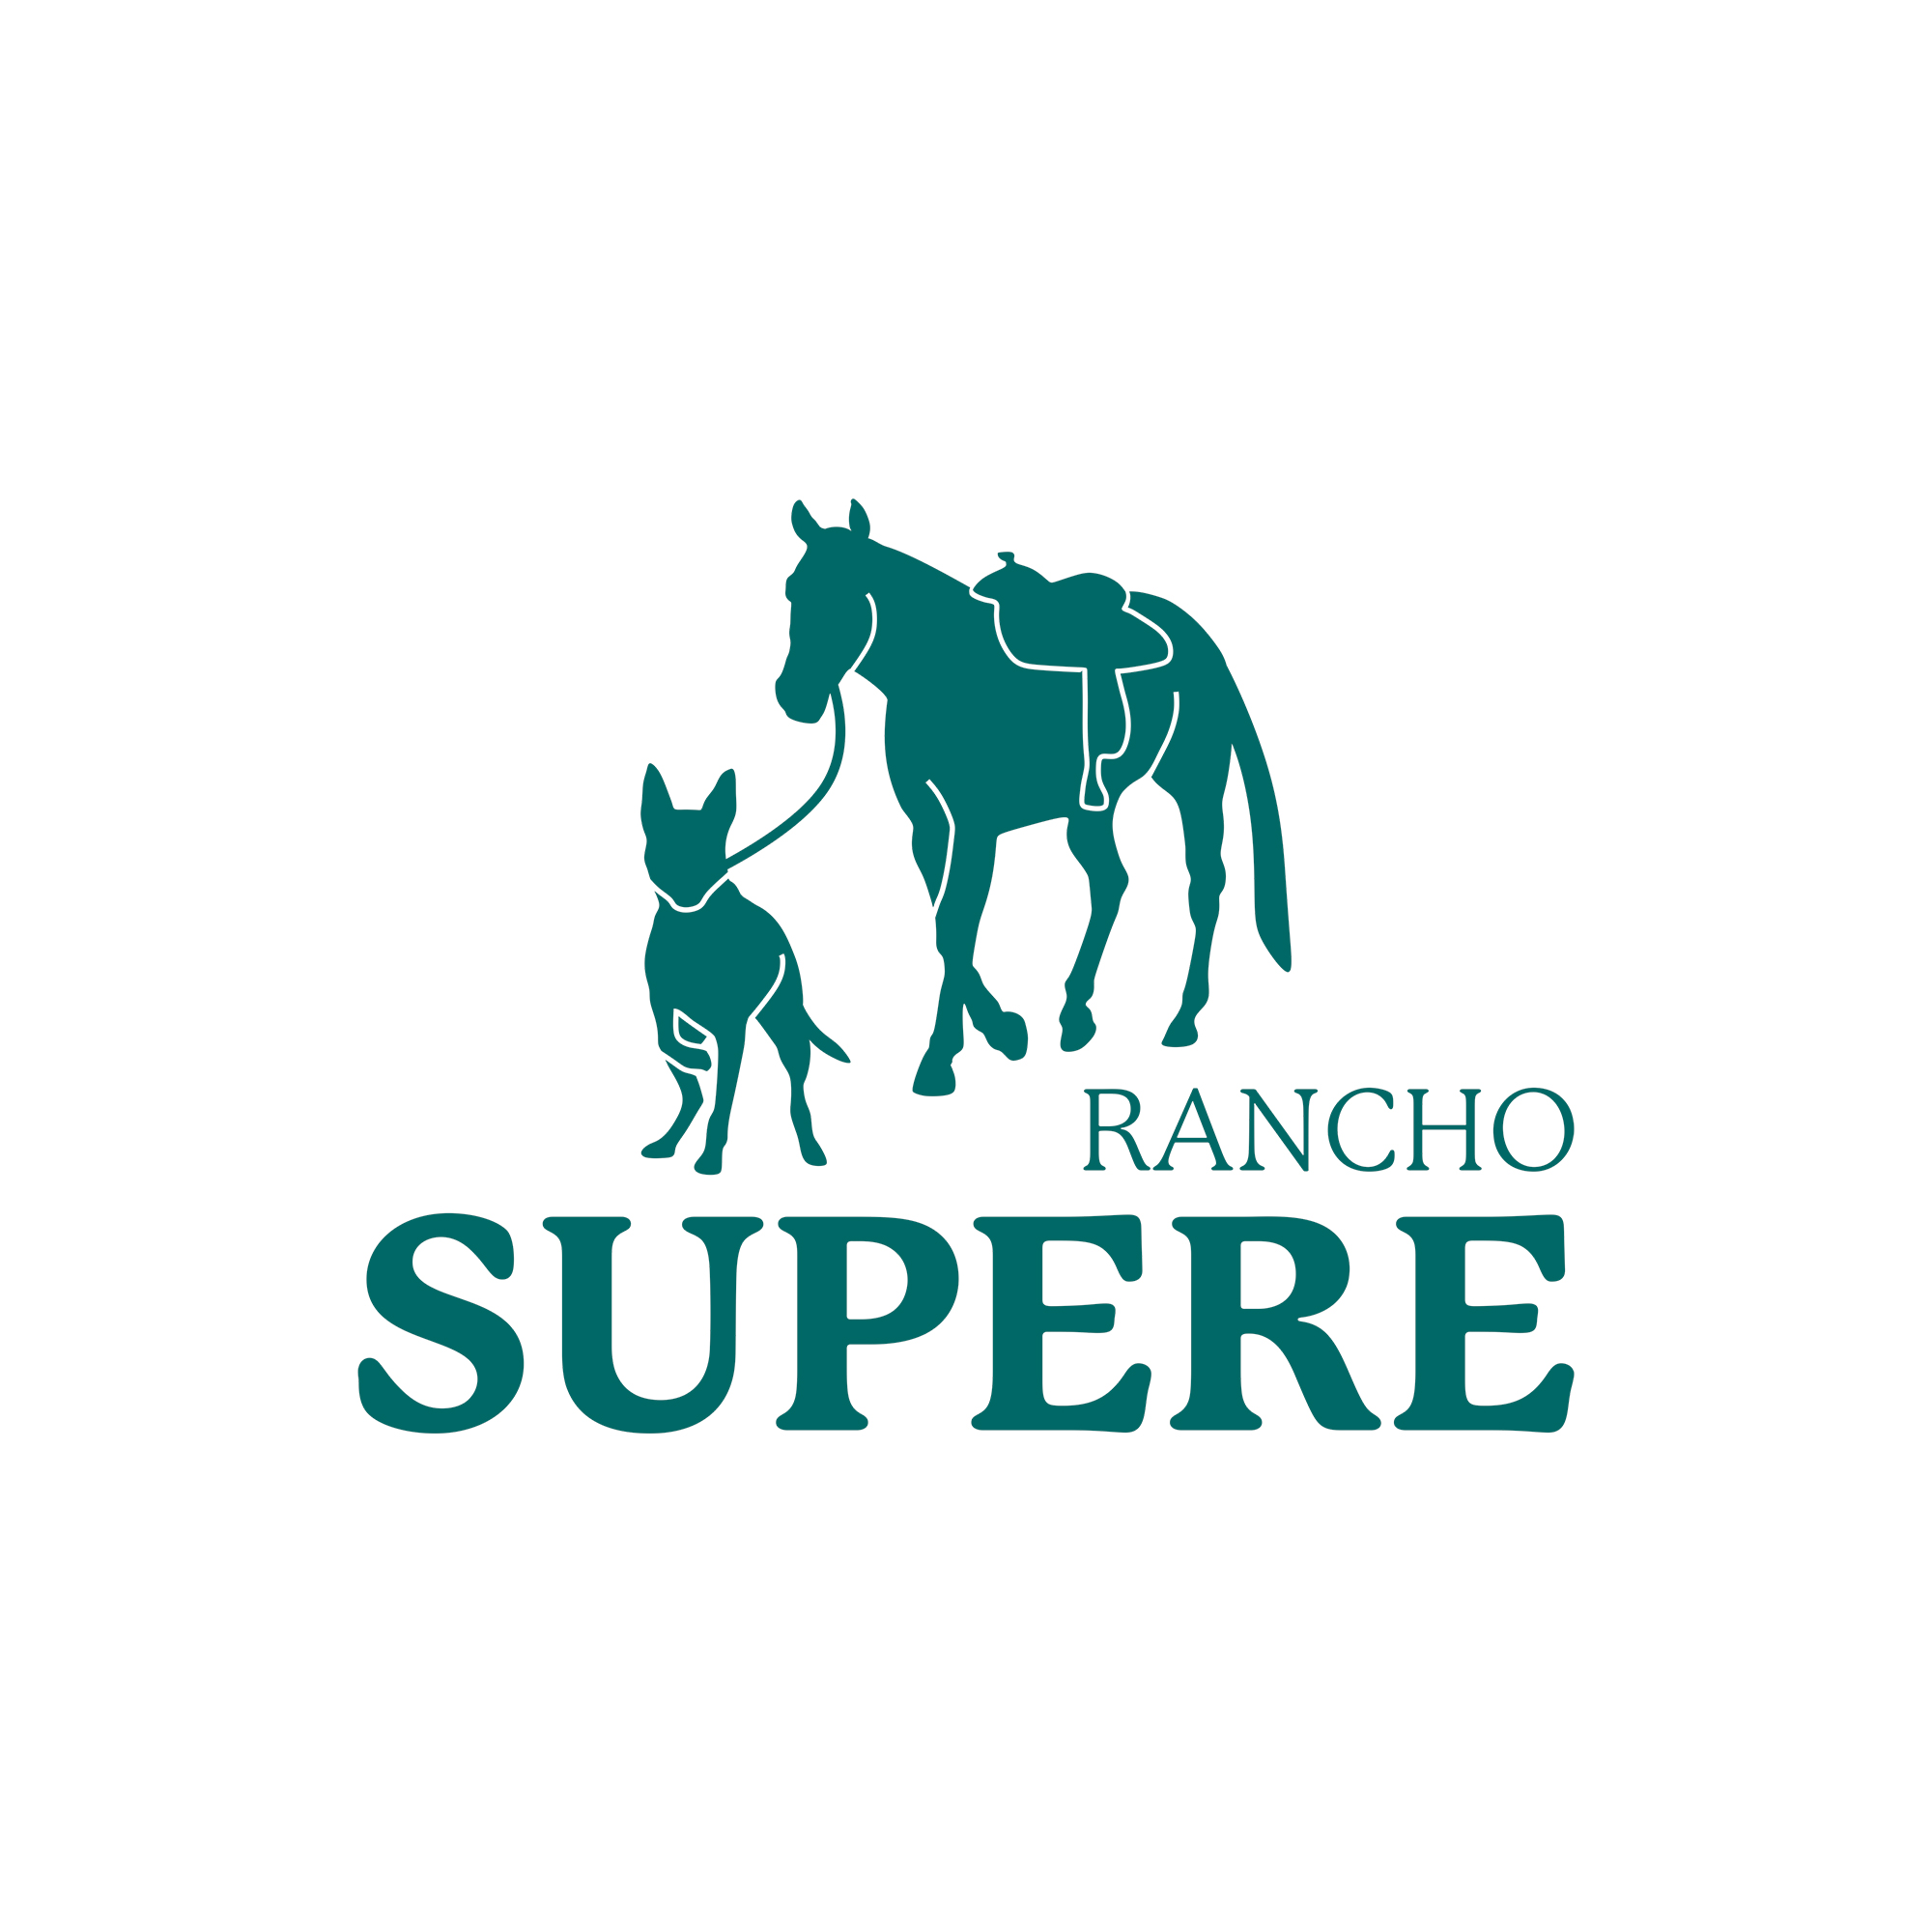 Rancho Supere